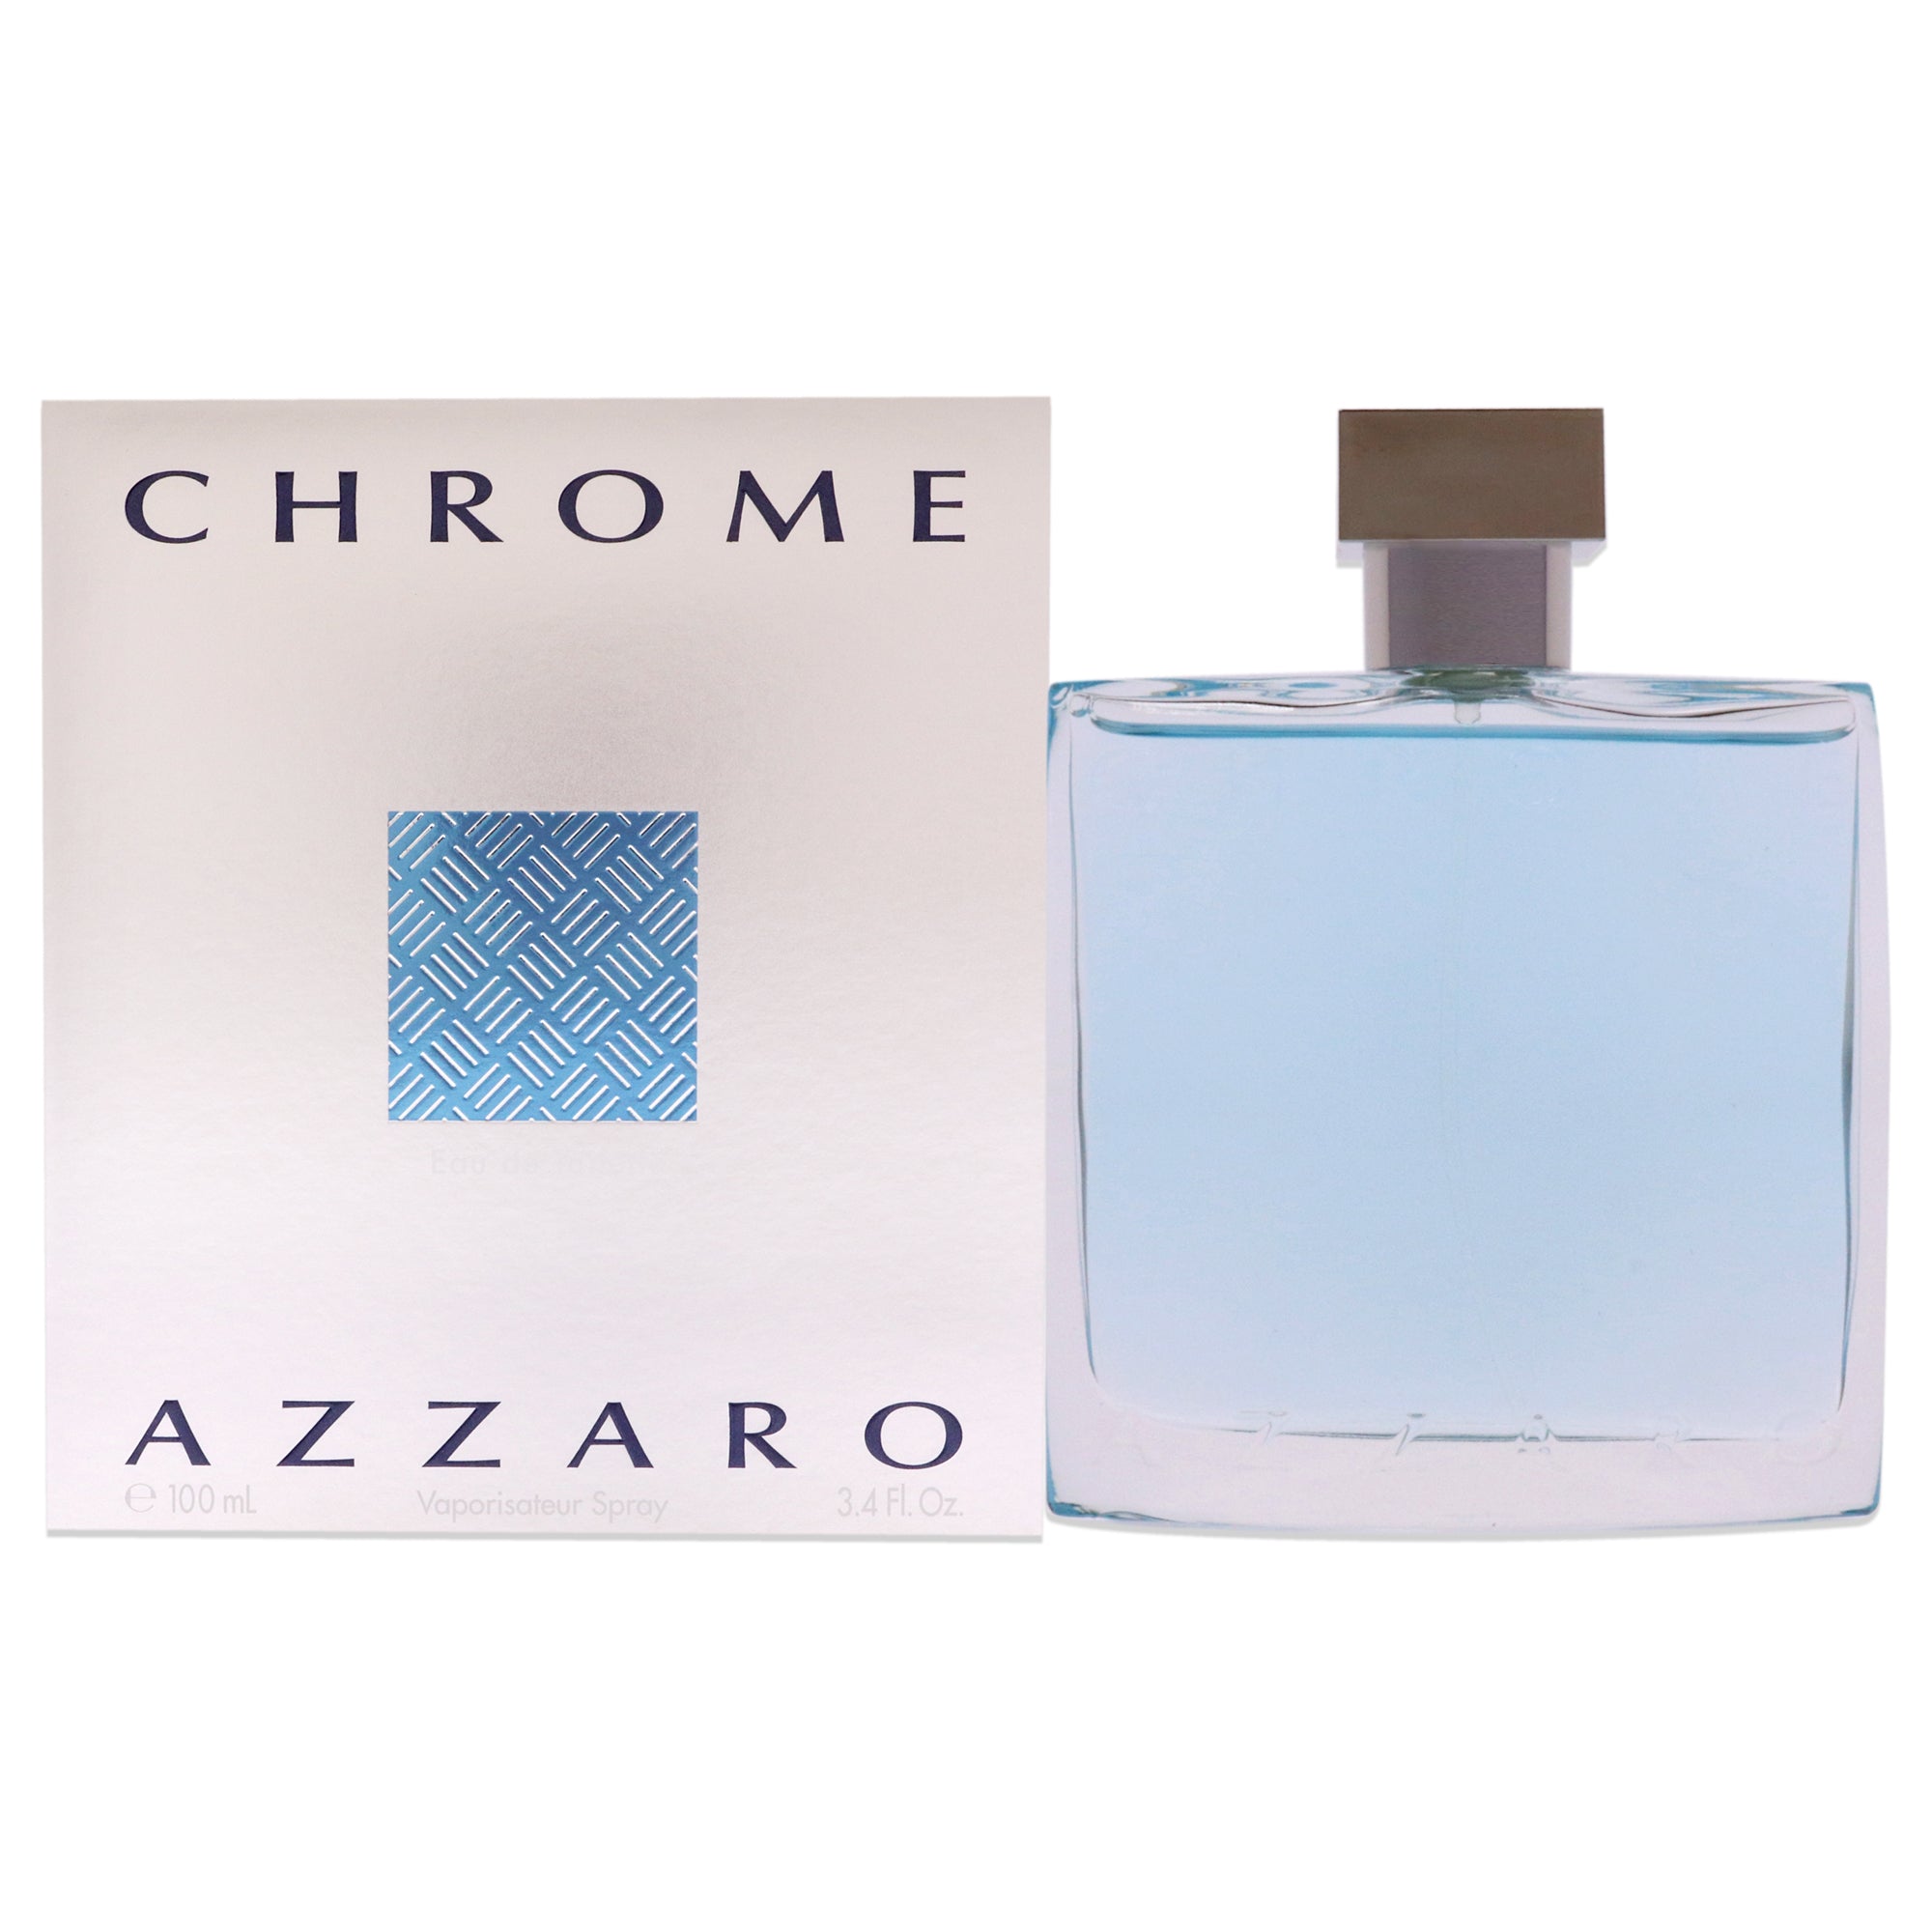 Chrome by Azzaro for Men 3.4 oz EDT Spray